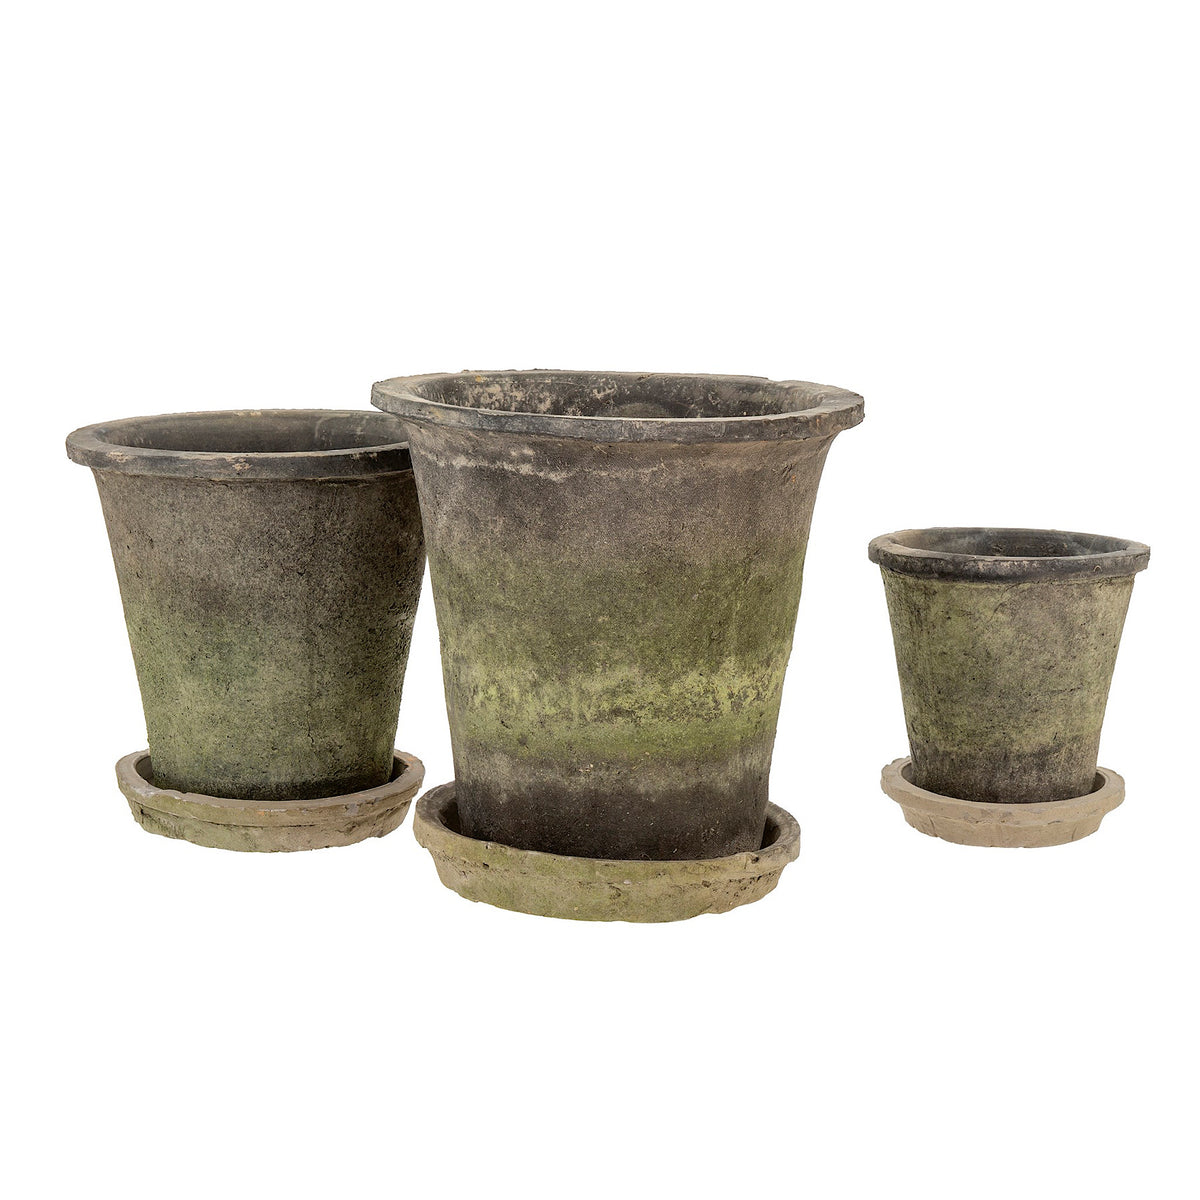 Aged Clay Pots, Antique Blackstone, Three Sizes